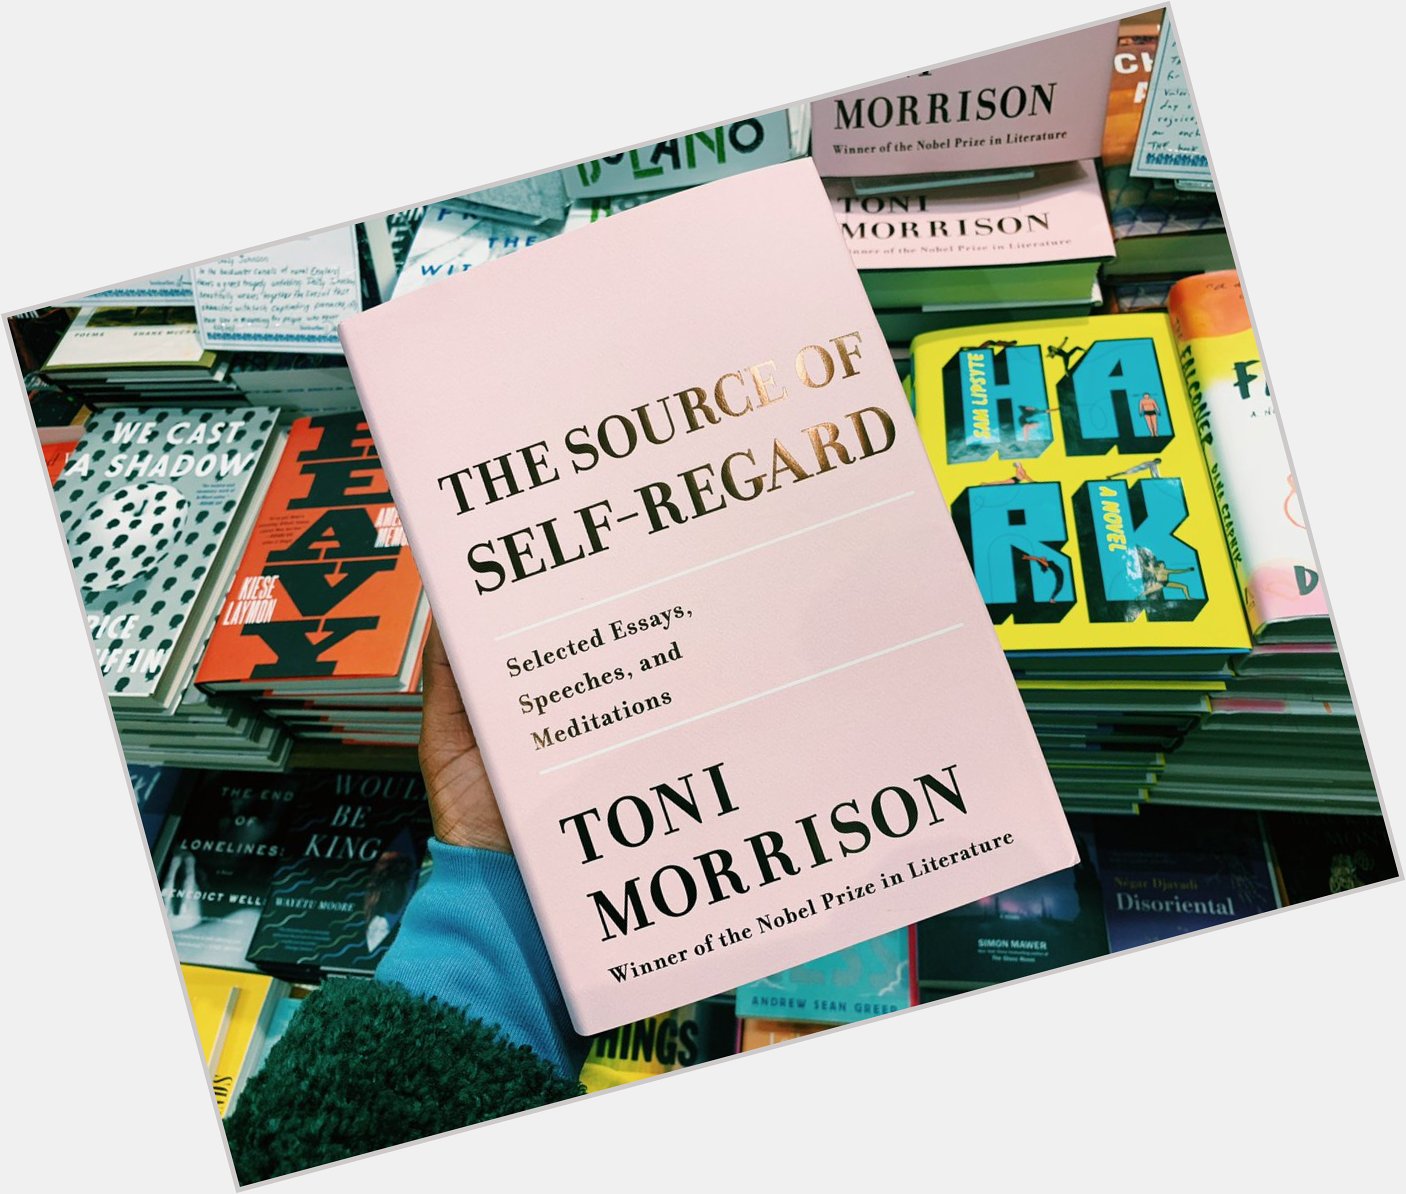 Happy Birthday to Toni Morrison and Happy to me  x 